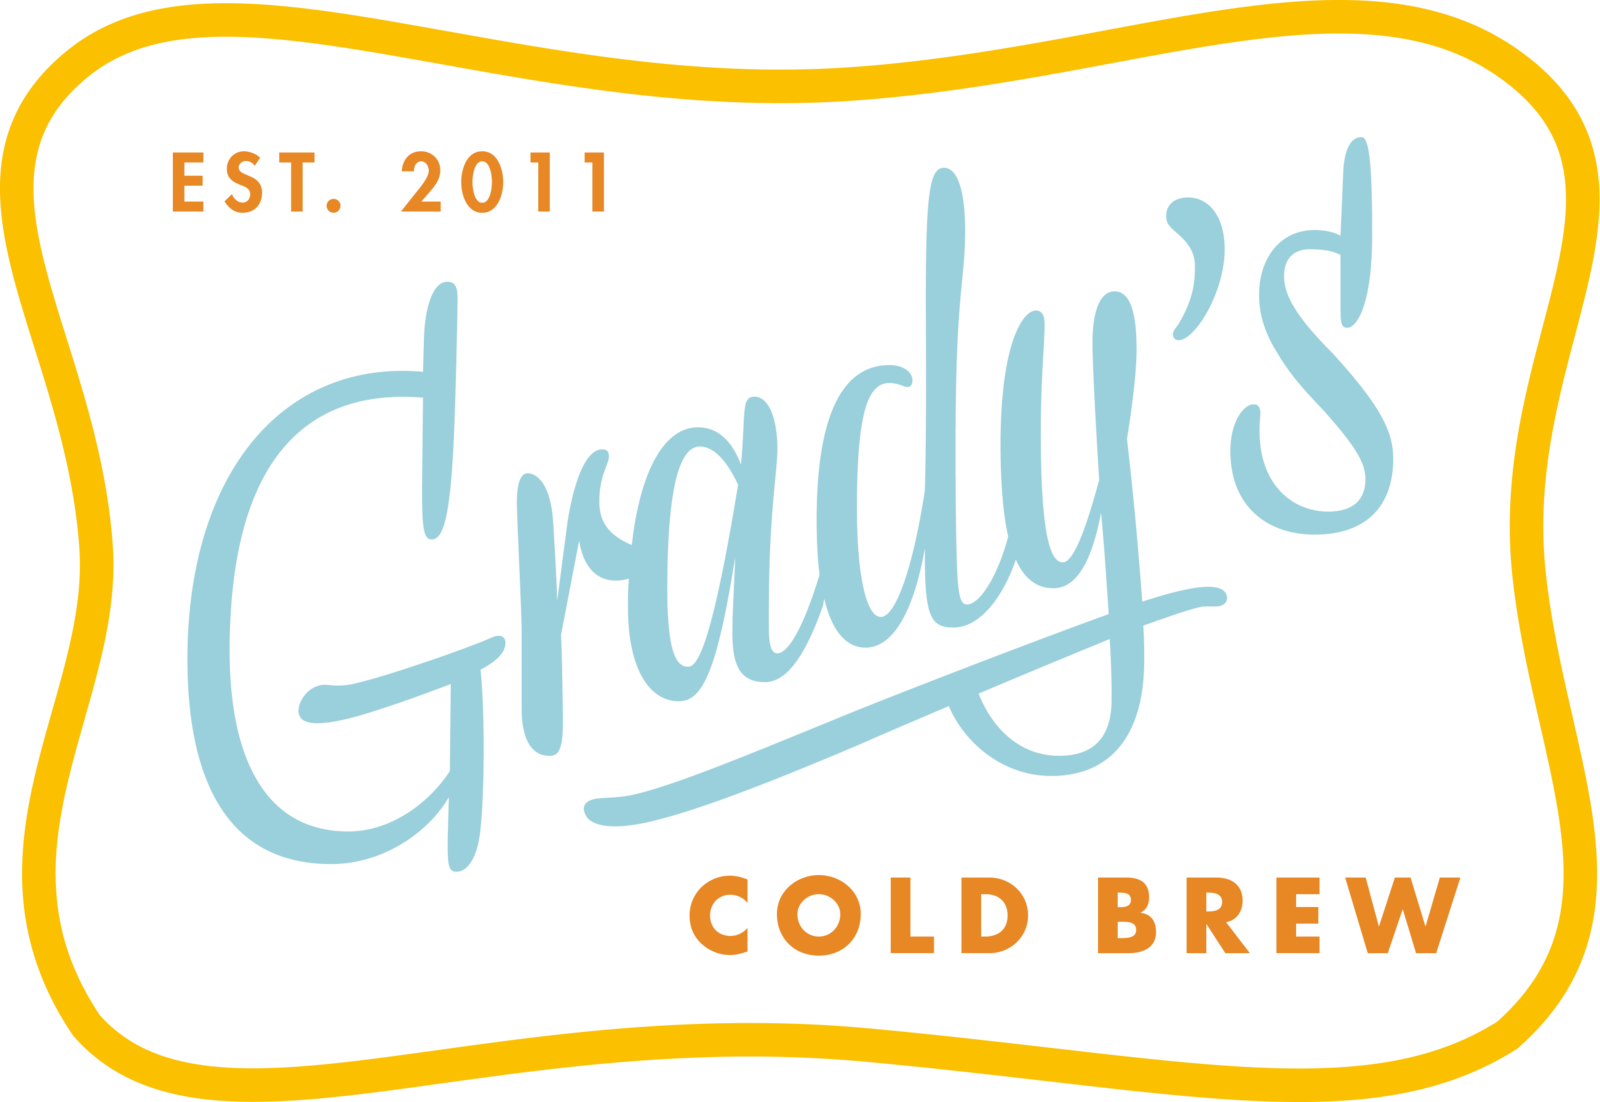 Sponsorpitch & Grady's Cold Brew